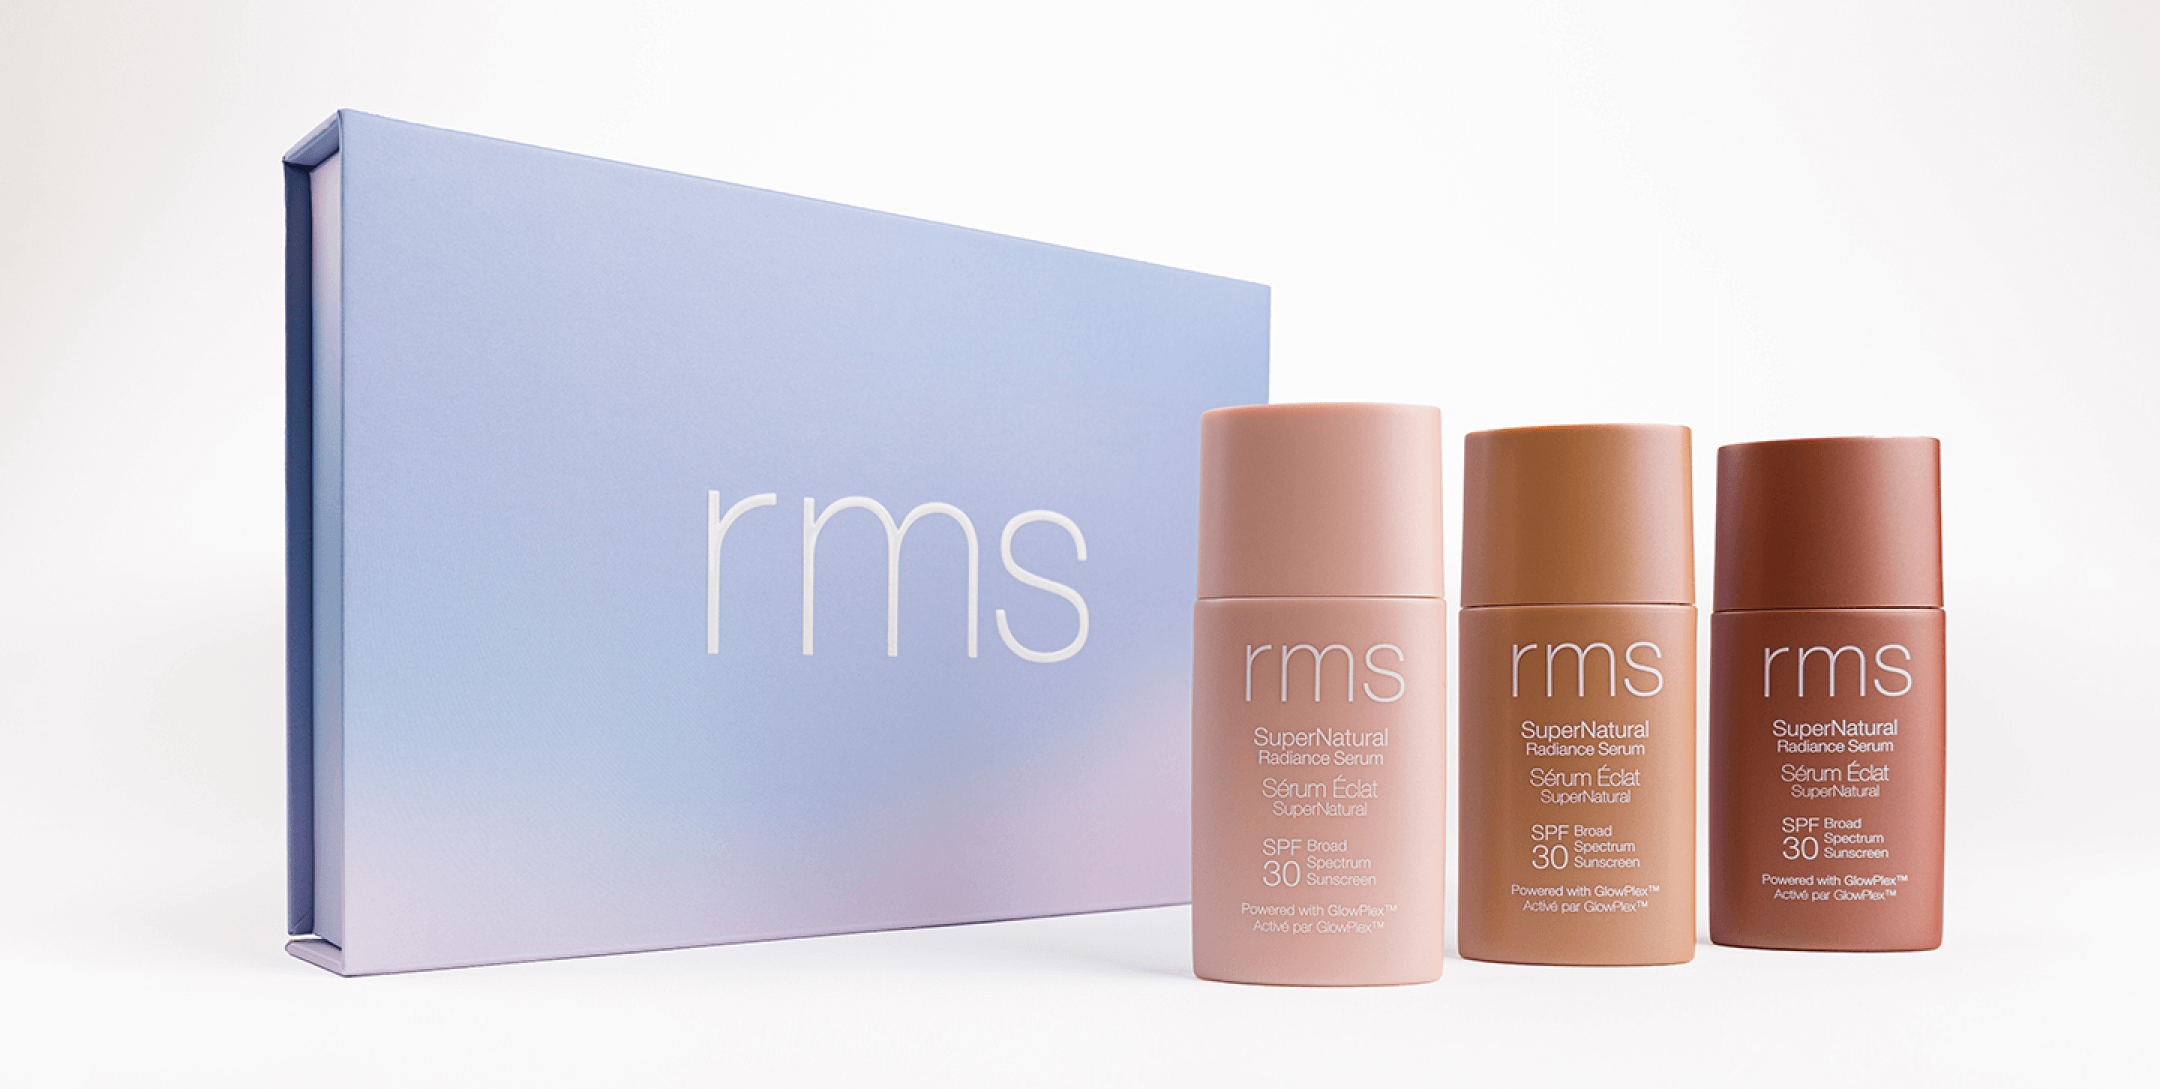 RMS, RMS Beauty, Beauty, Cosmetics, Makeup, Skintint, Skintint SPF, Super Natural Radiance Serum, Packaging, Strategic Design